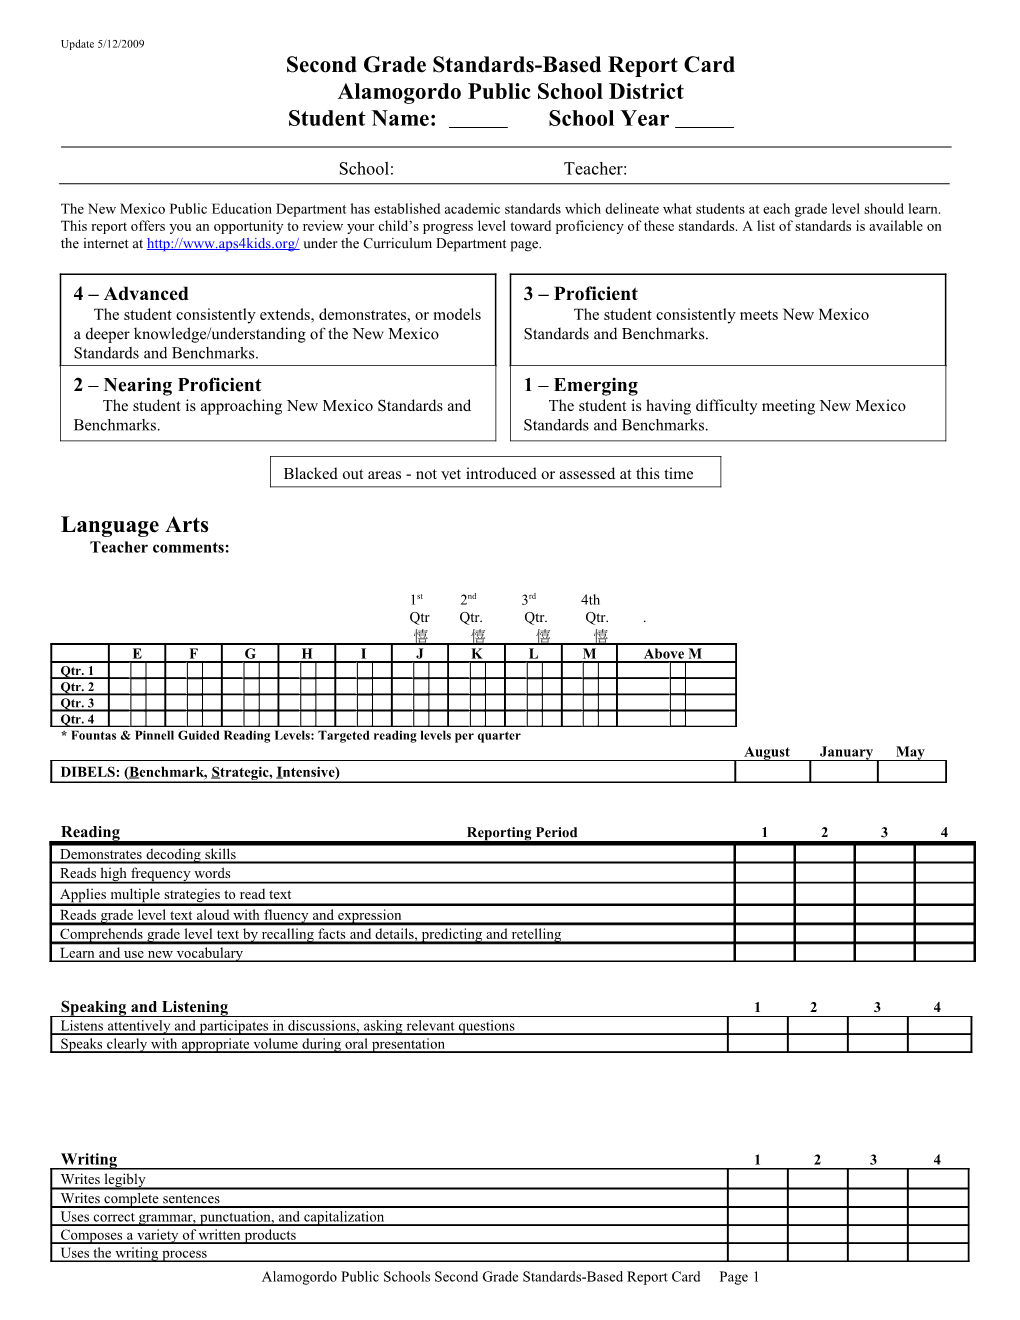 Second Grade Standards-Based Report Card